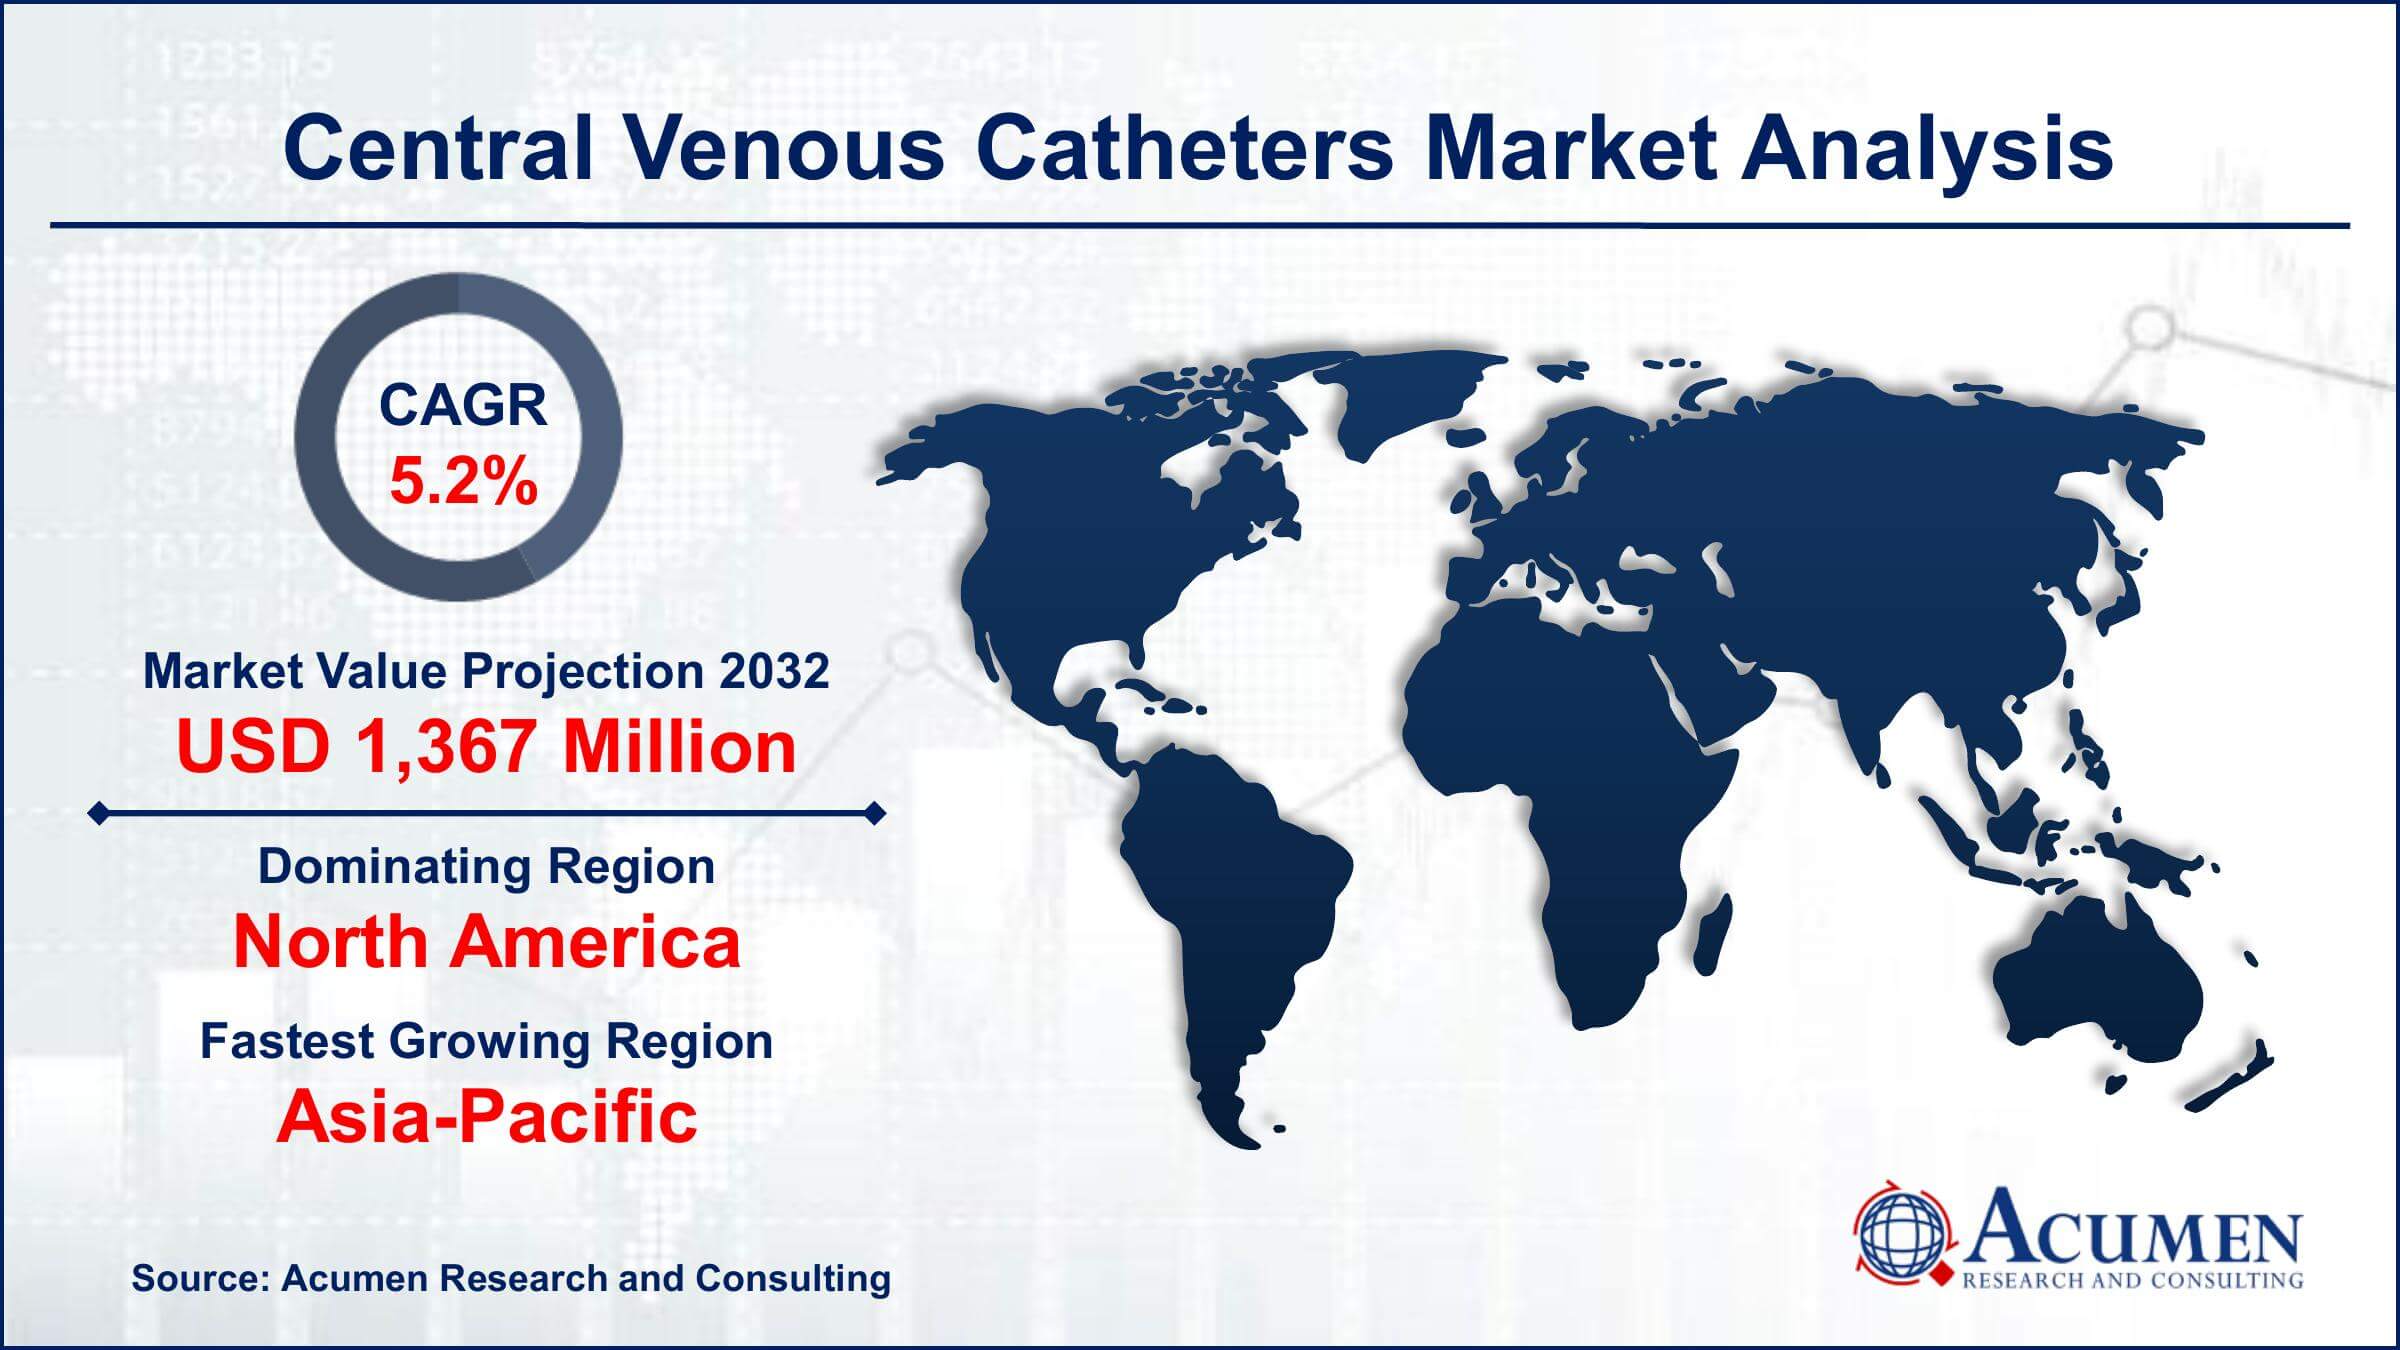 Global Central Venous Catheters Market Trends